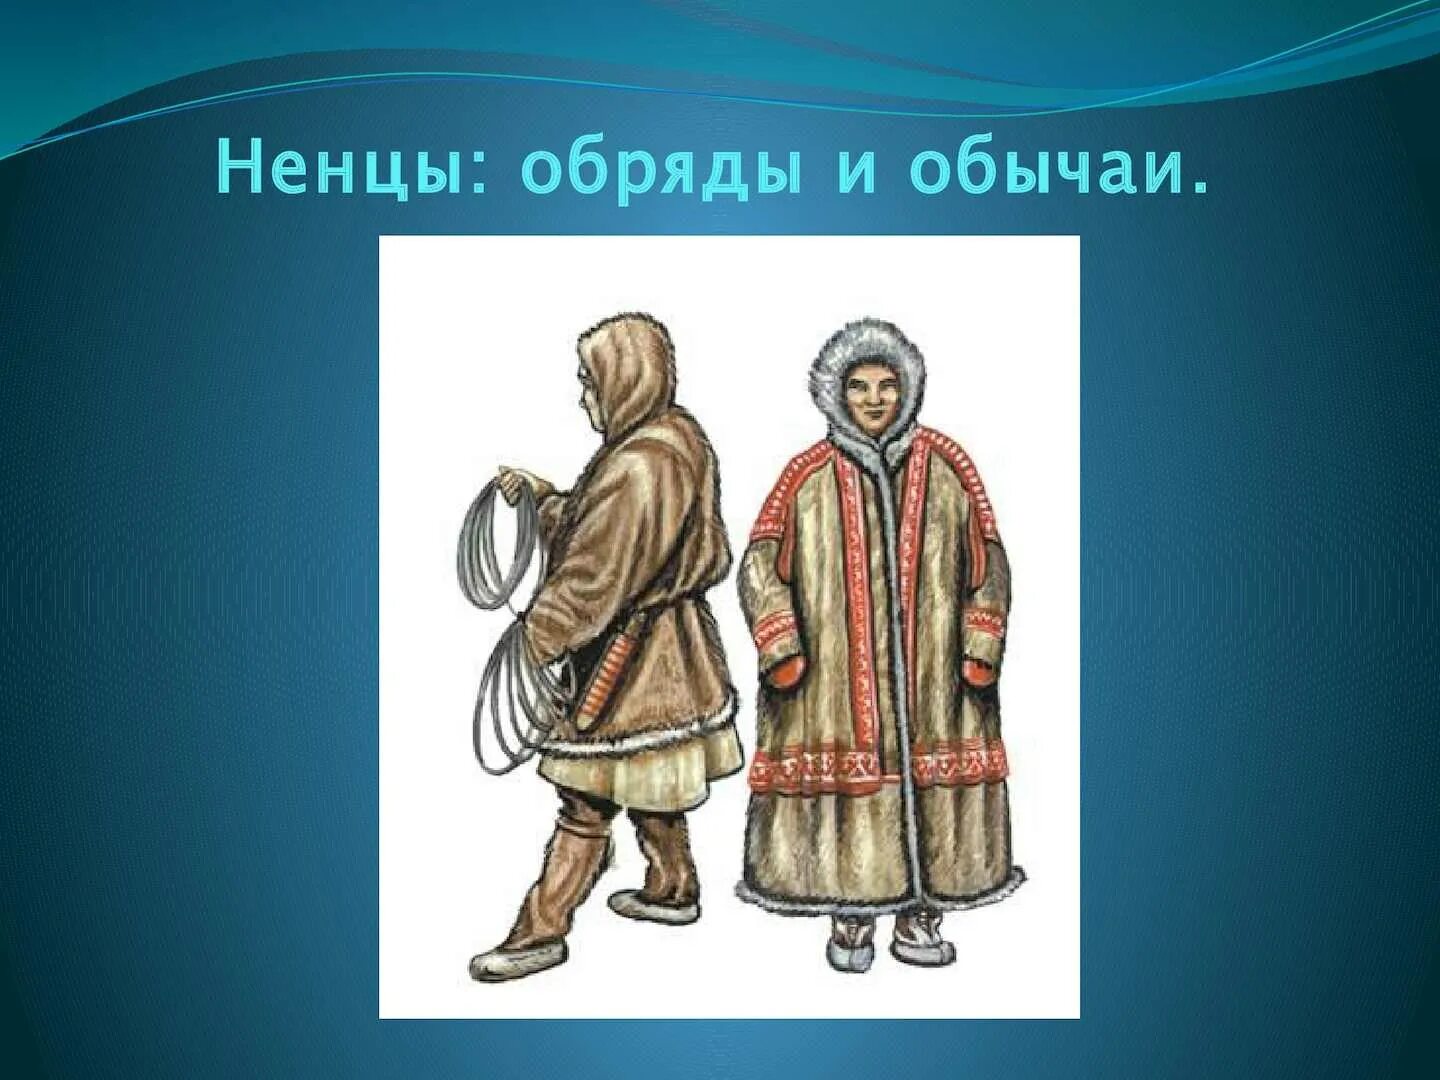 Мужская одежда коми и ненцев 6 букв. Народы Сибири ненцы в 17 веке. Ненцы 17 век одежда. Ненцы народ рисунок. Ненцы народ одежда.